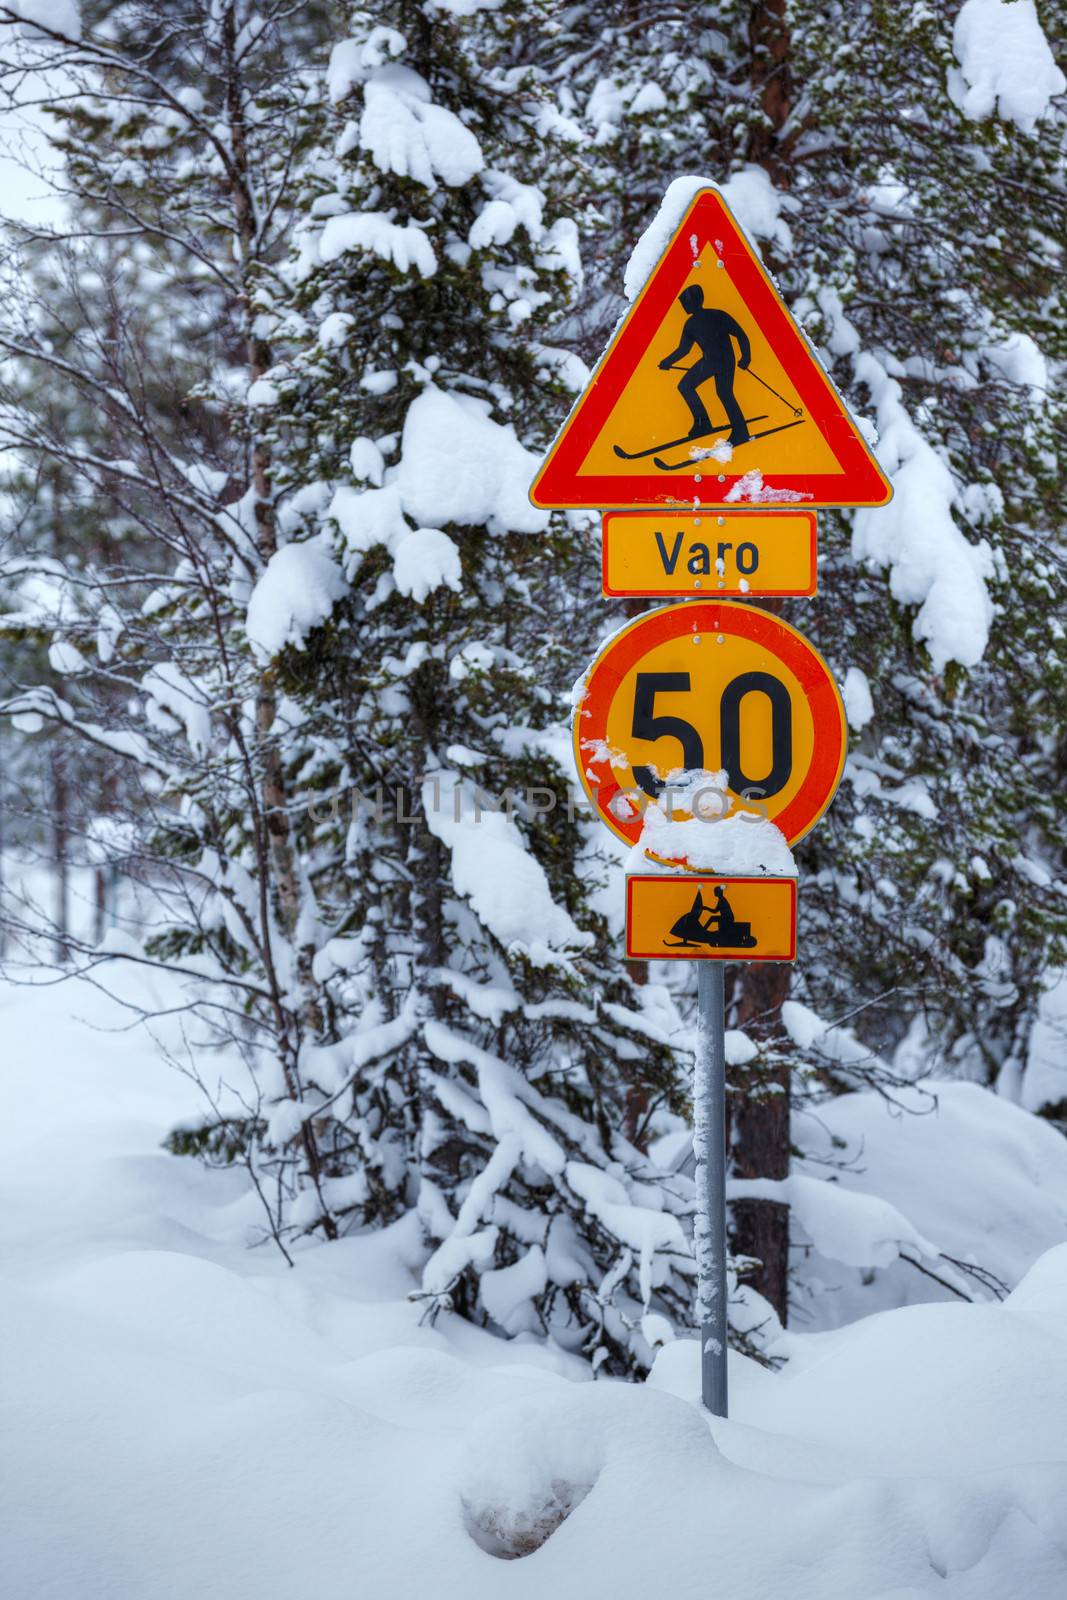 Warning traffic sign on snowy arctic winter road.